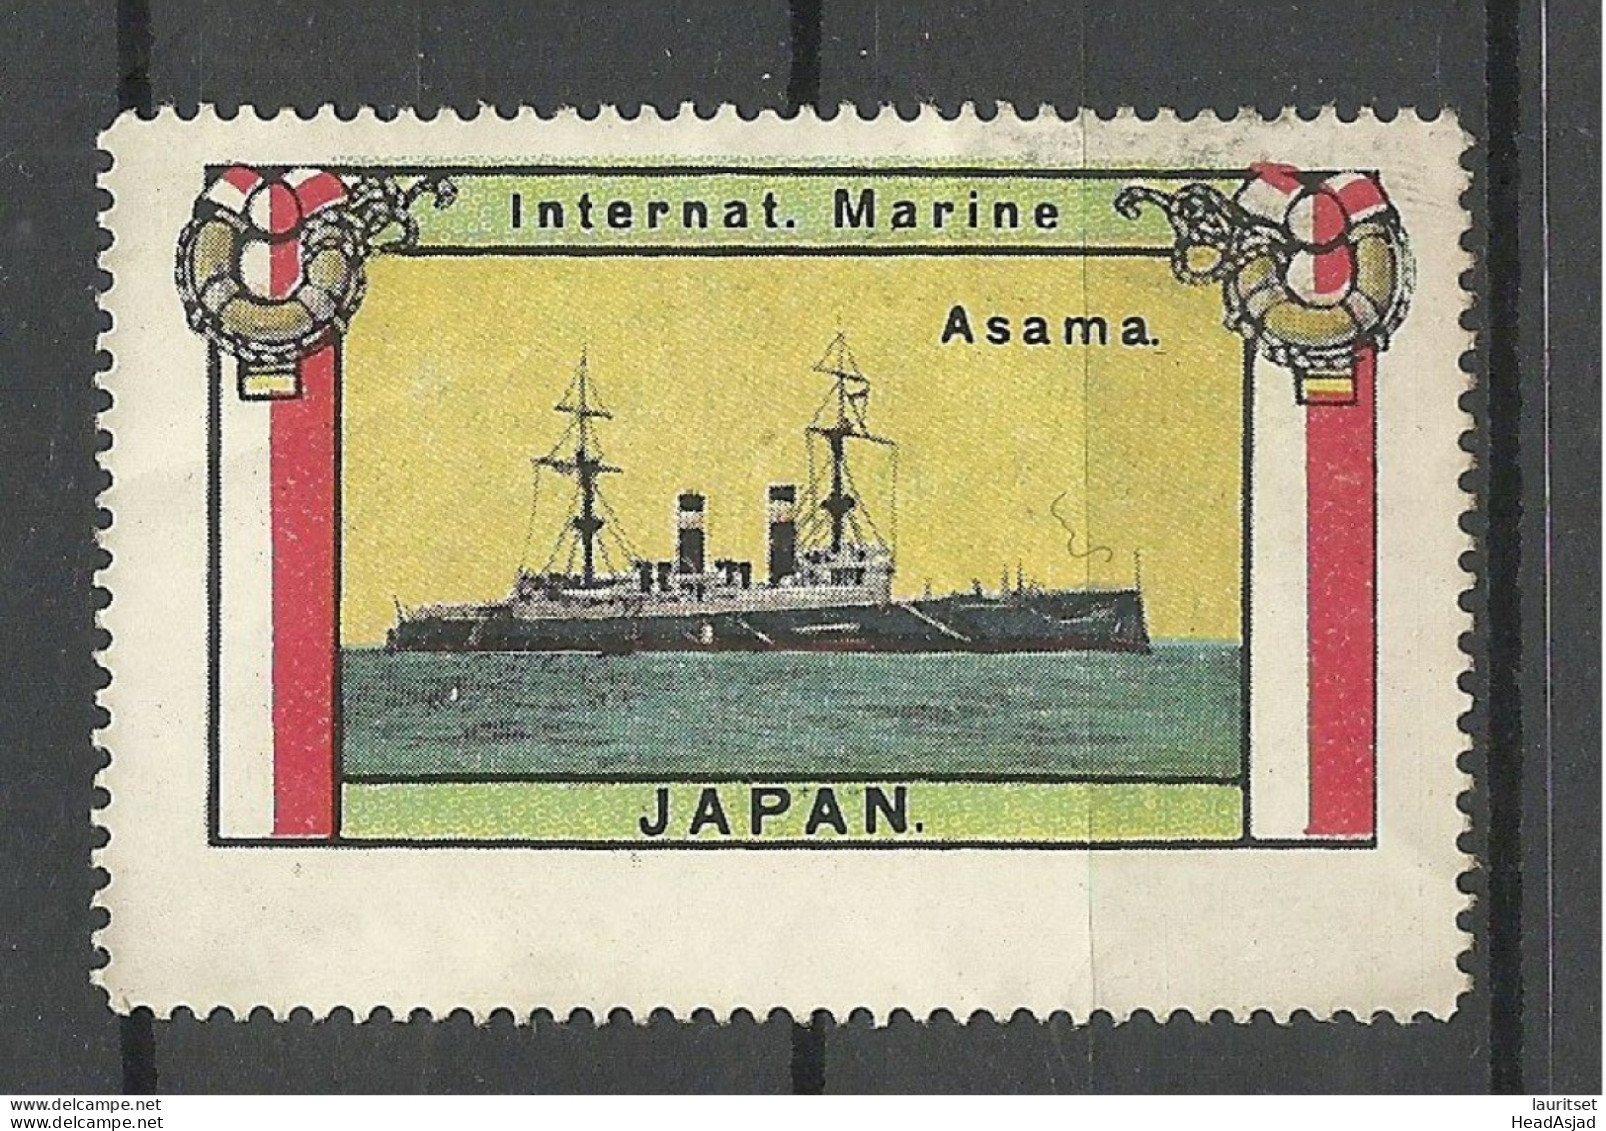 JAPAN NIPPON Intern. Marine Der Schiff Ship ASAMA Vignette Poster Stamp (*) - Ships